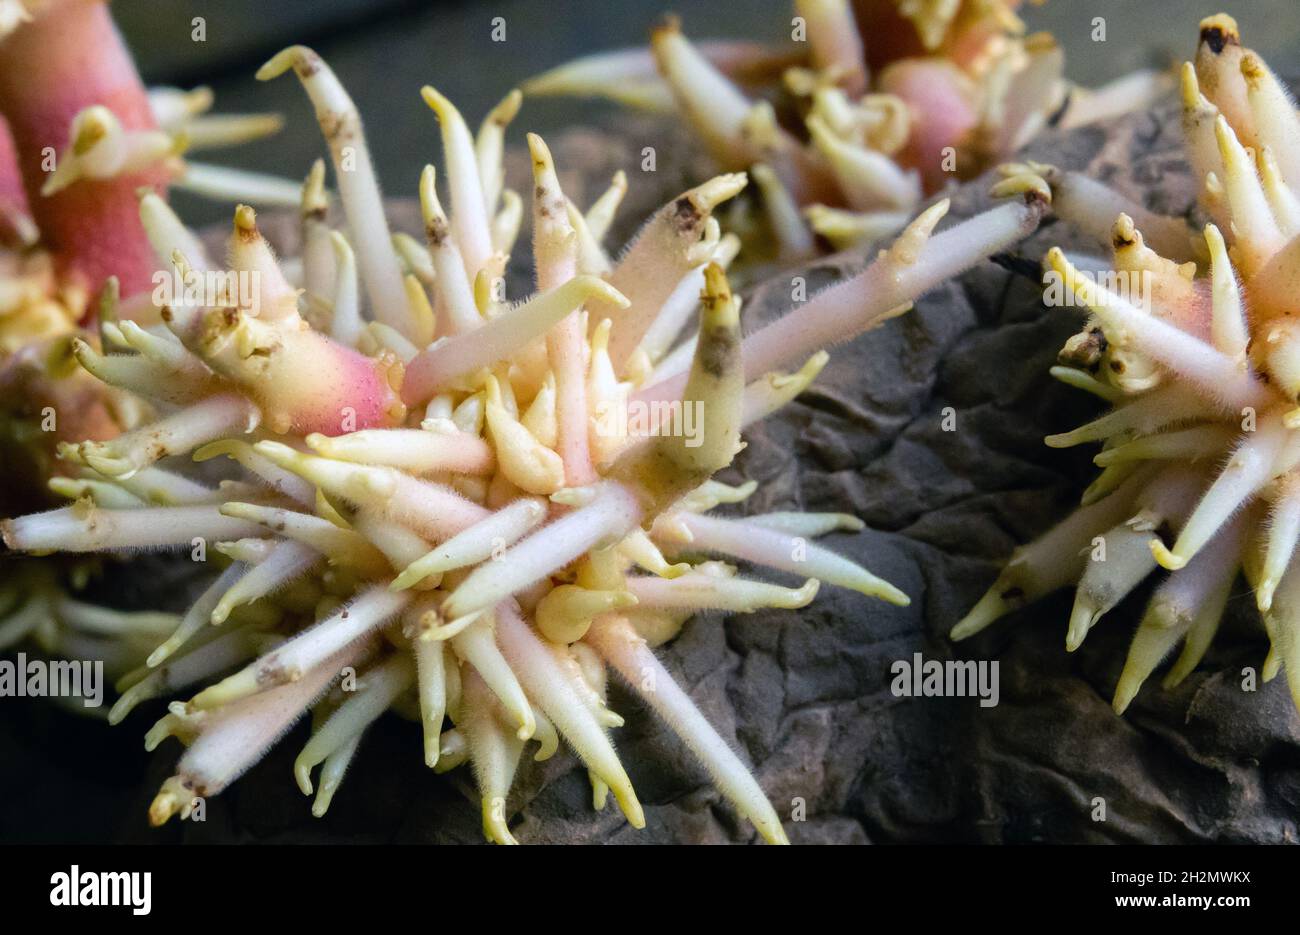 Geschrumpfte gekeimte Kartoffeln mit üppigen Bündchen junger Wurzeln aus nächster Nähe Stockfoto